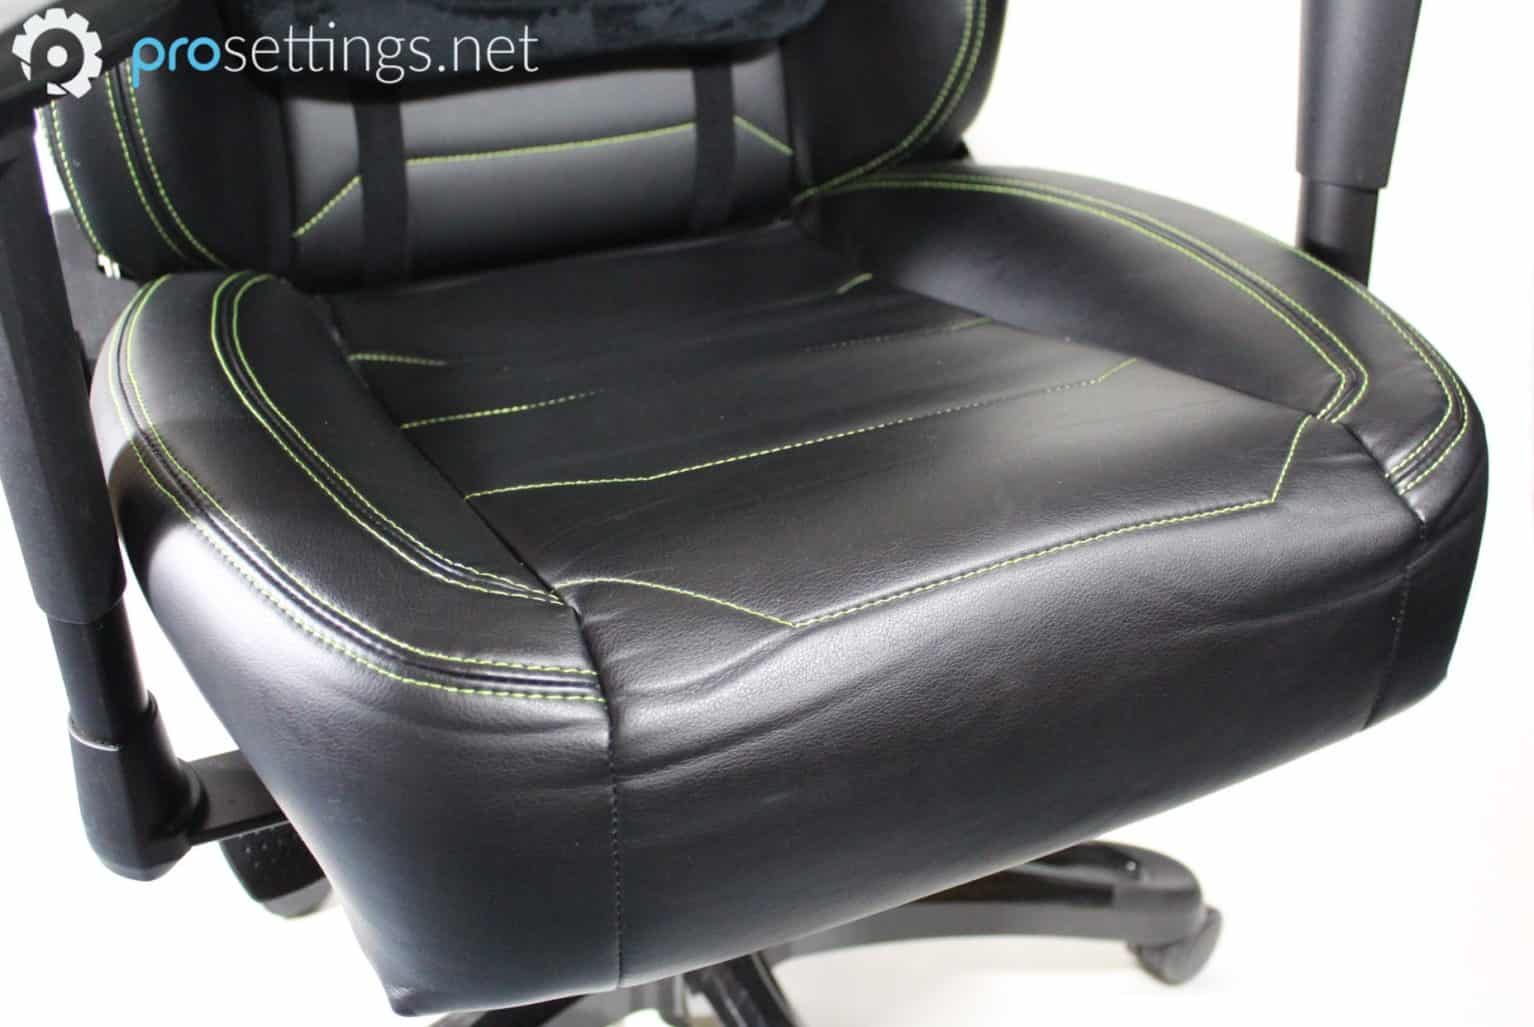 Speedseats Comfort Review Chair Seat